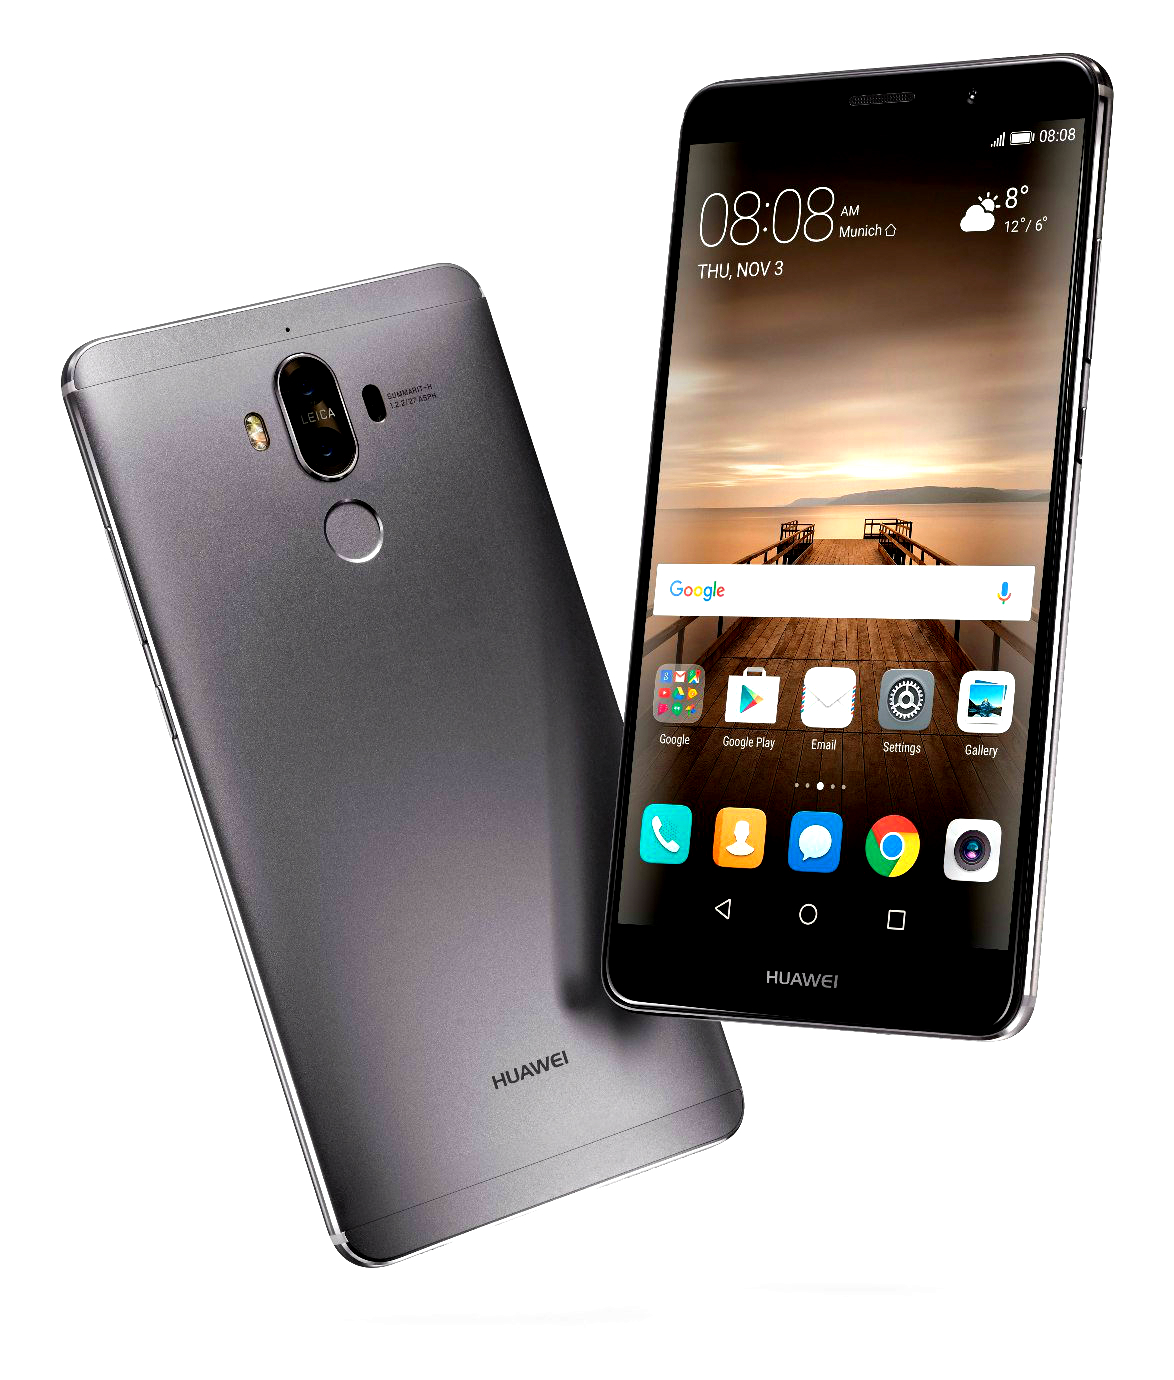 Huawei Mate 9 Smartphone Creates The Rush In Pakistan